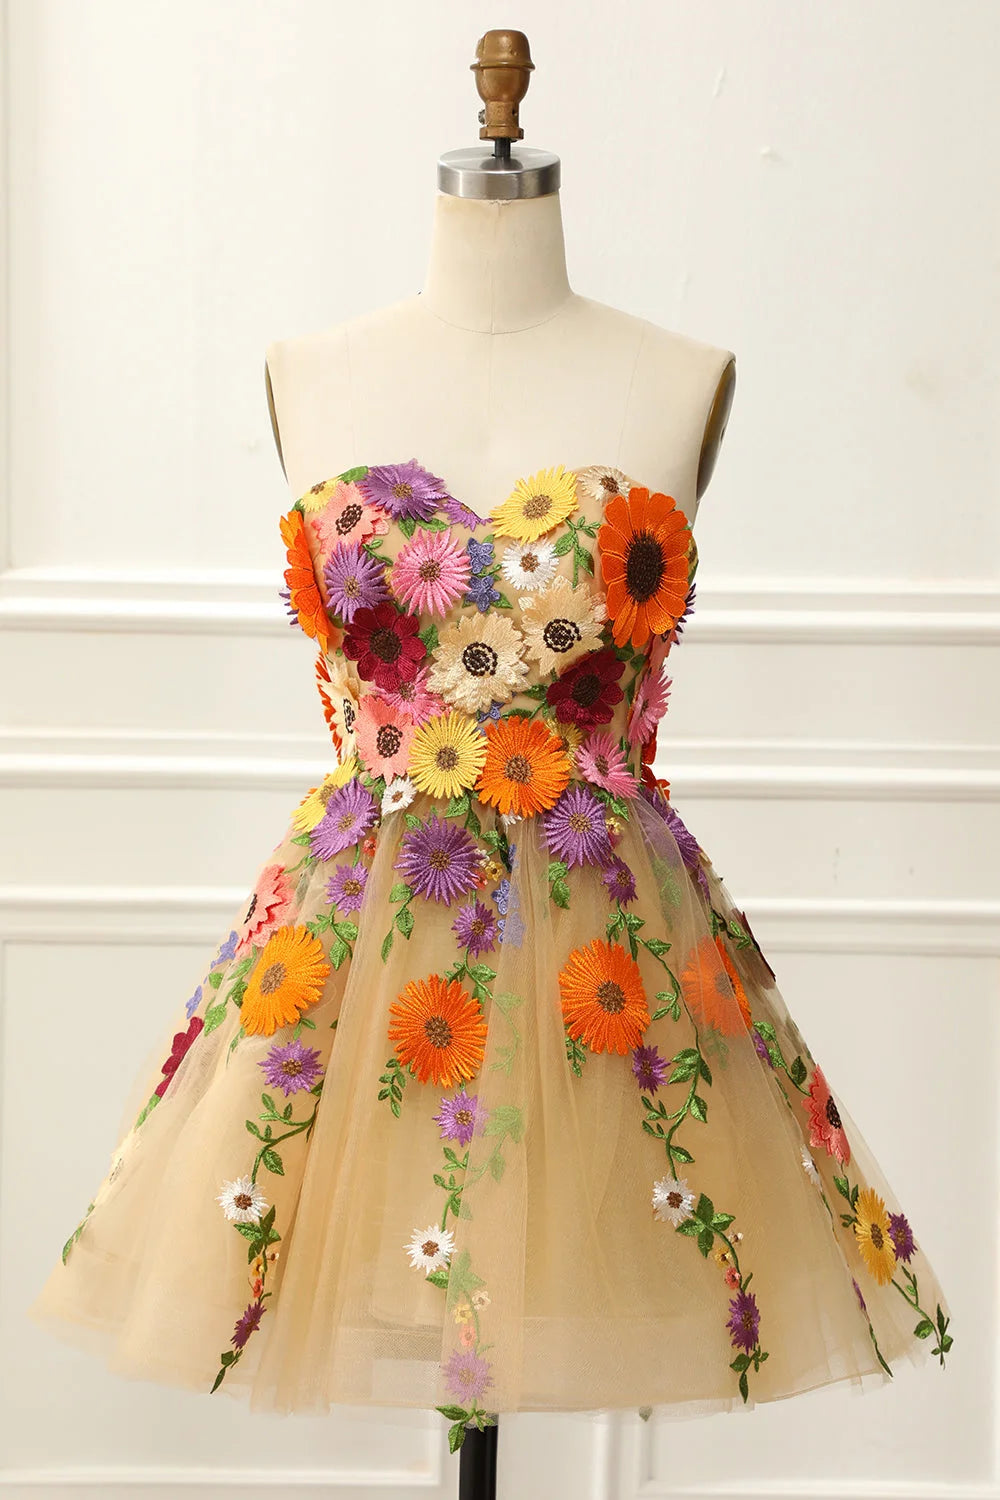 3D Flower Lace Embroidery Prom Dress Off Shoulder Lace-up Back vestidos par boda Sweetheart Short Skirt Wedding Dress